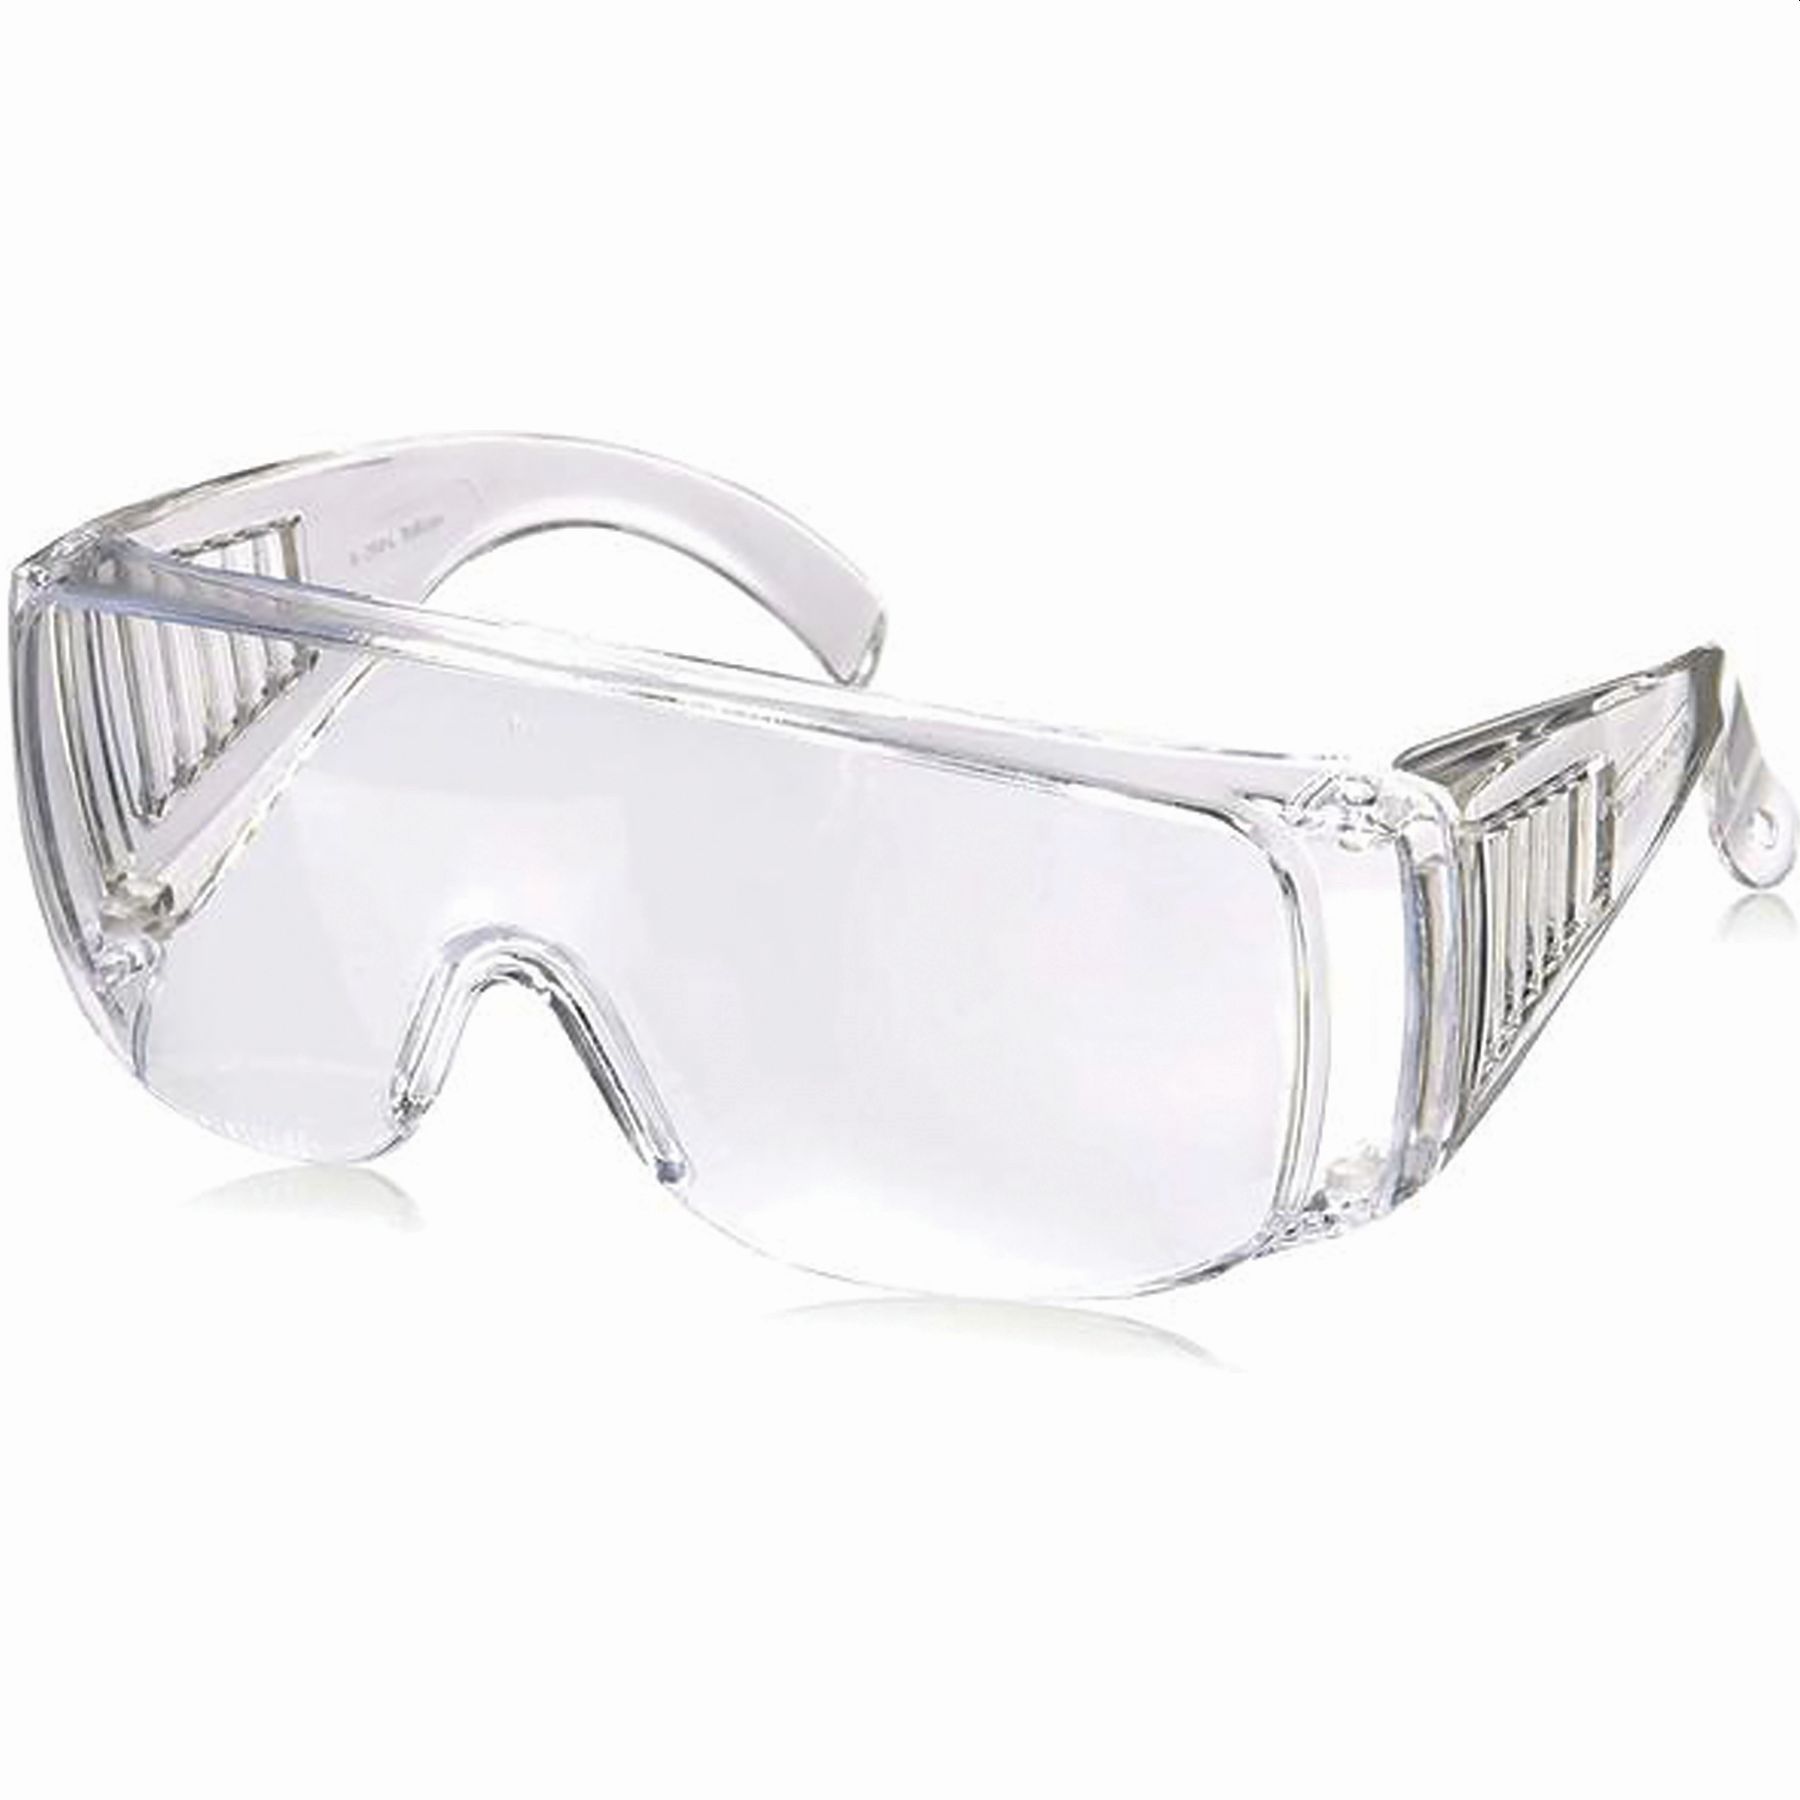 Anti-Fog Safety Glasses -Spectrum